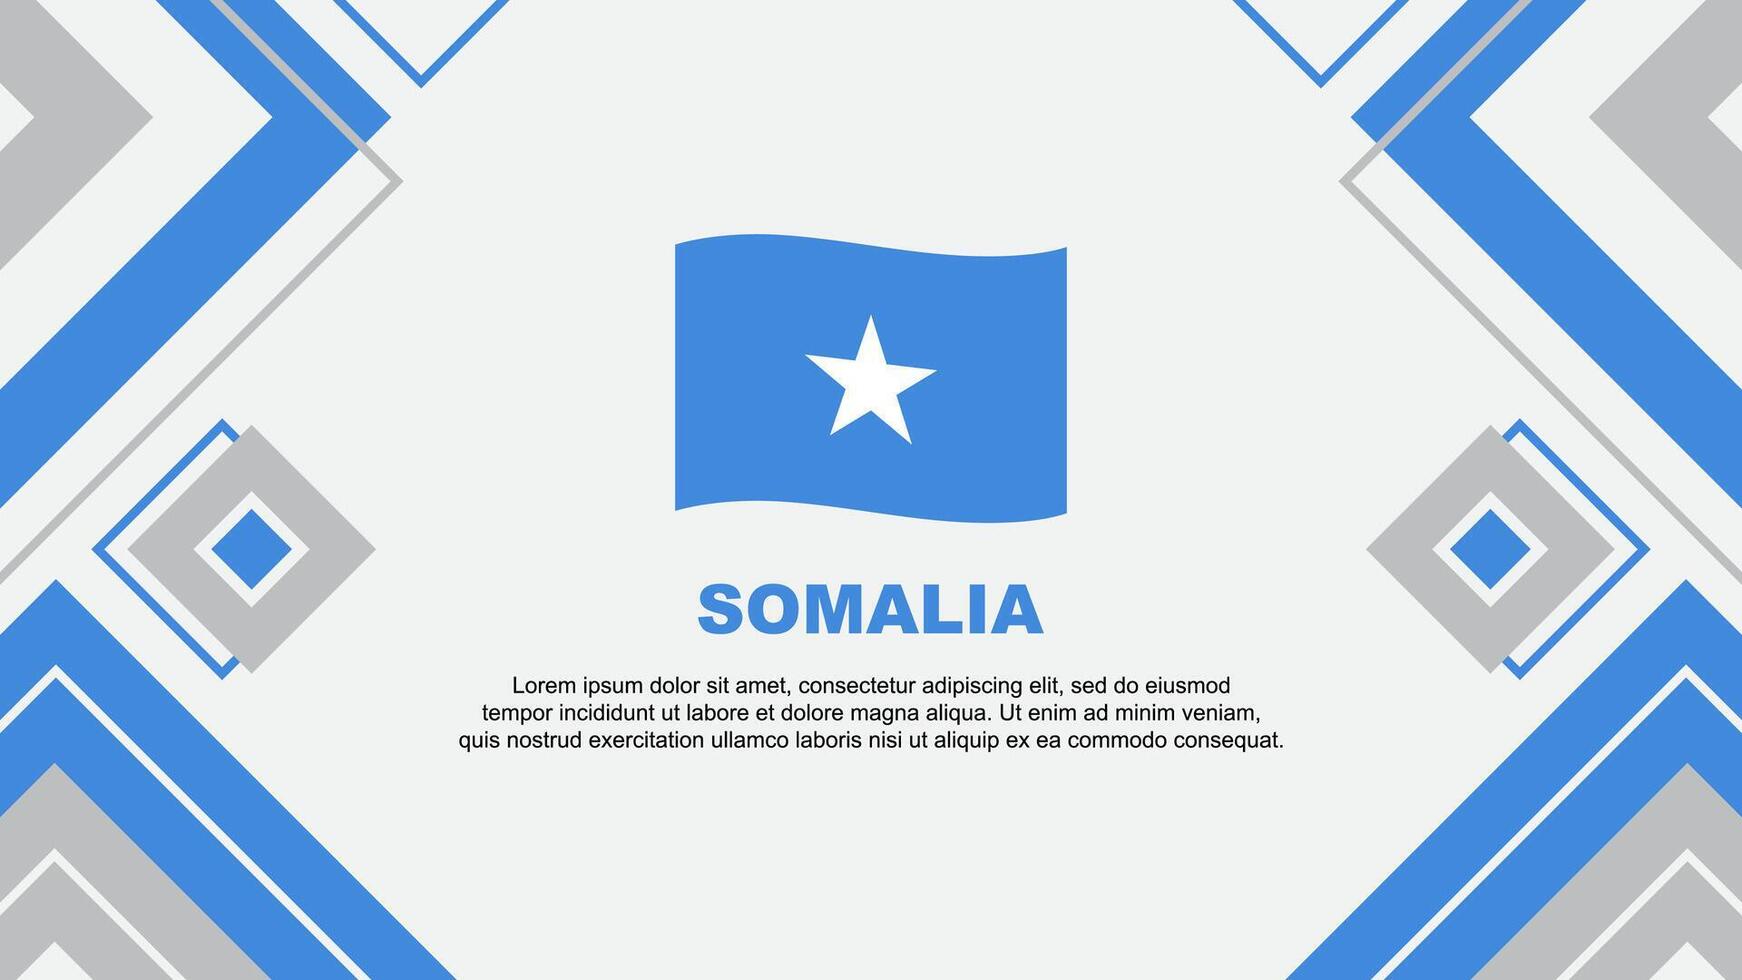 Somalia Flag Abstract Background Design Template. Somalia Independence Day Banner Wallpaper Vector Illustration. Somalia Background